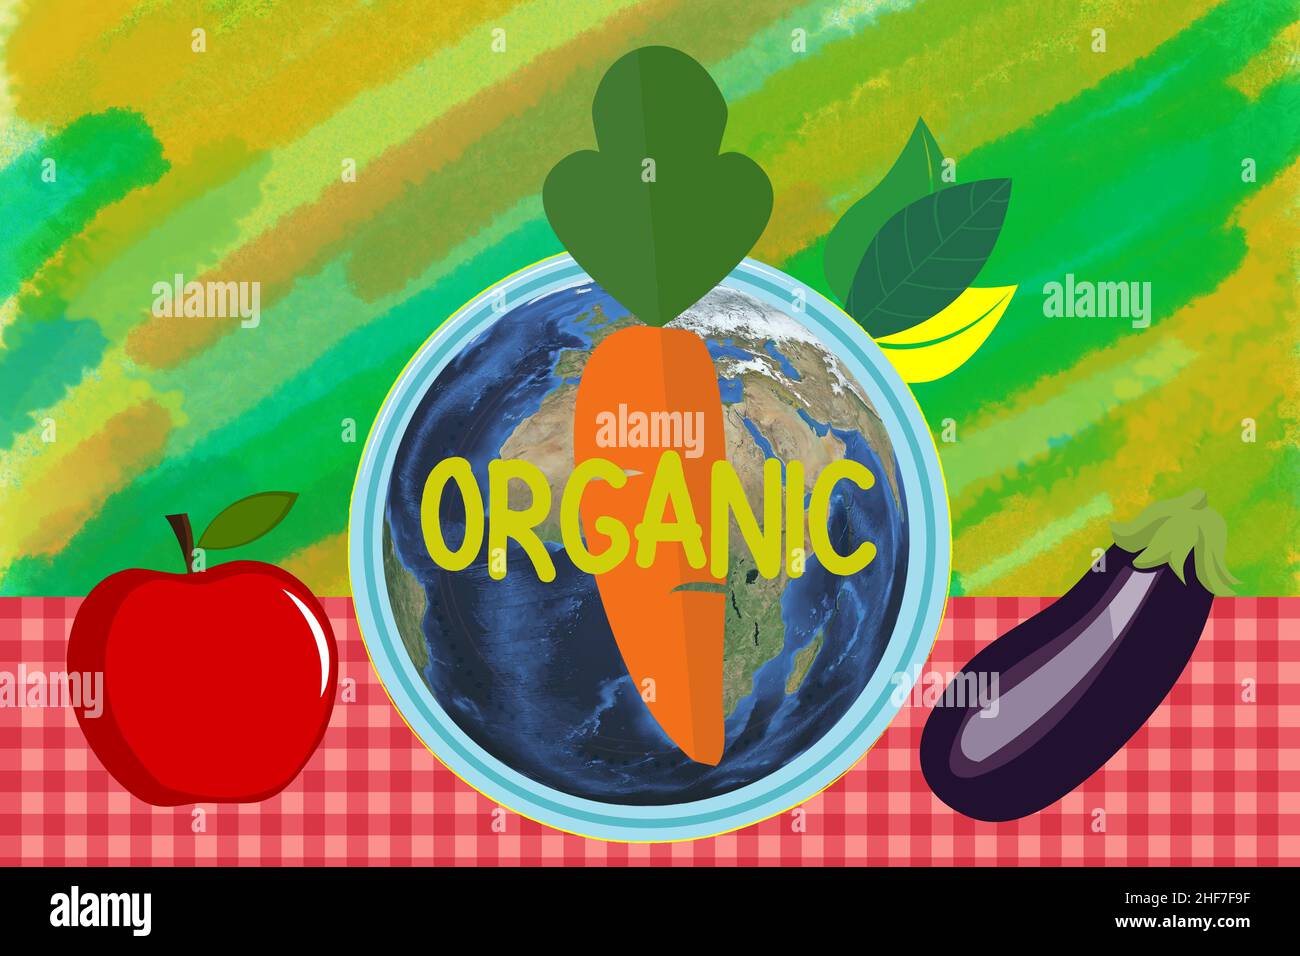 Organic food creative illustration Stock Photo